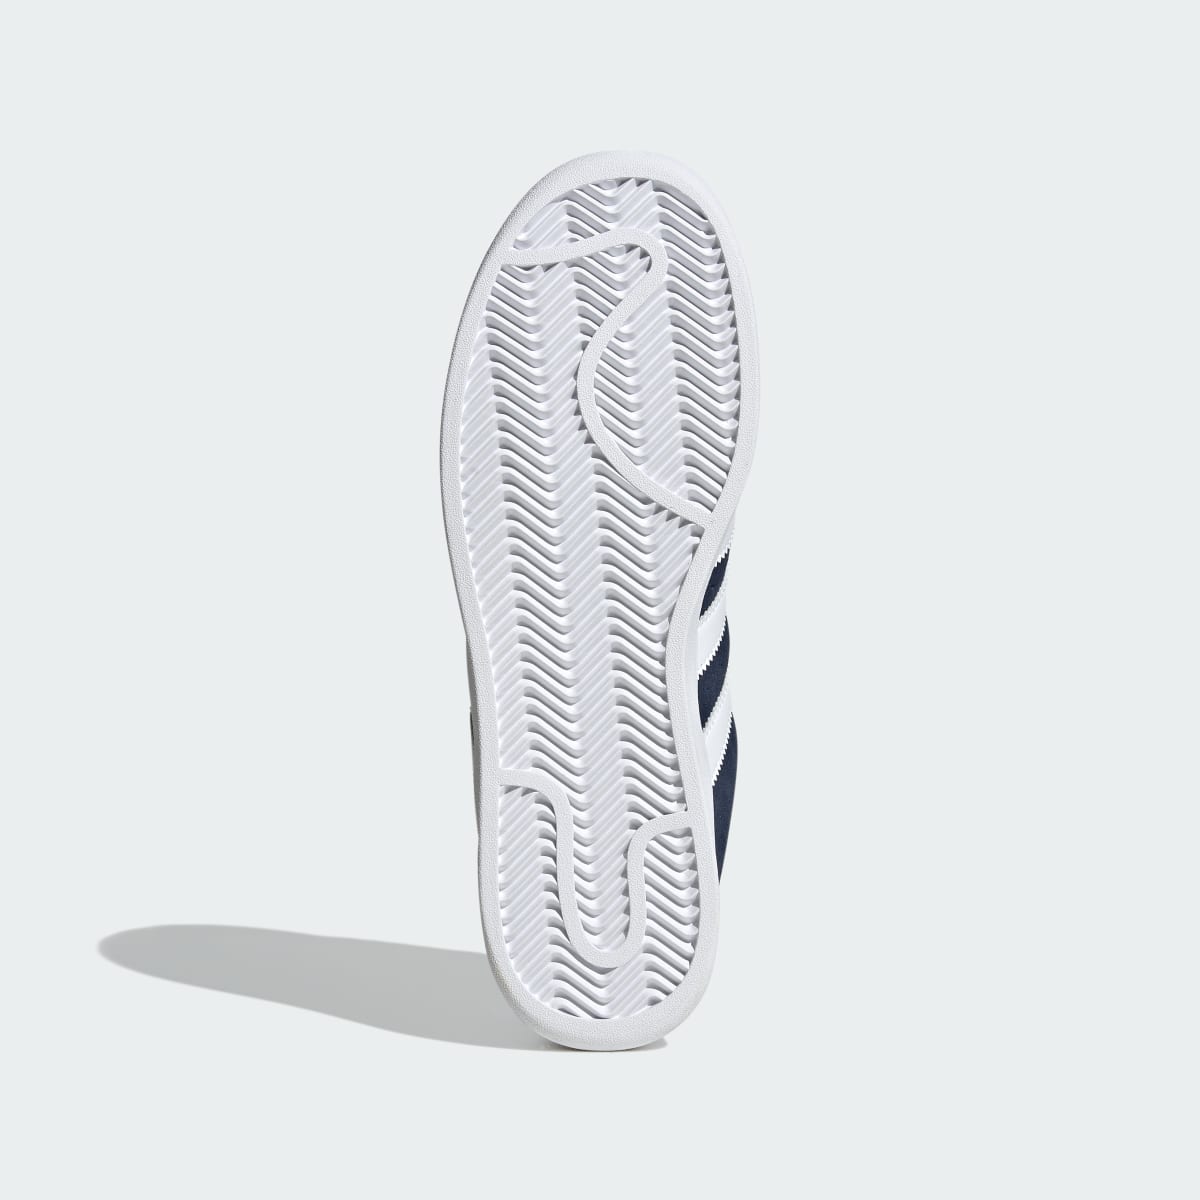 Adidas Scarpe Superstar XLG. 4